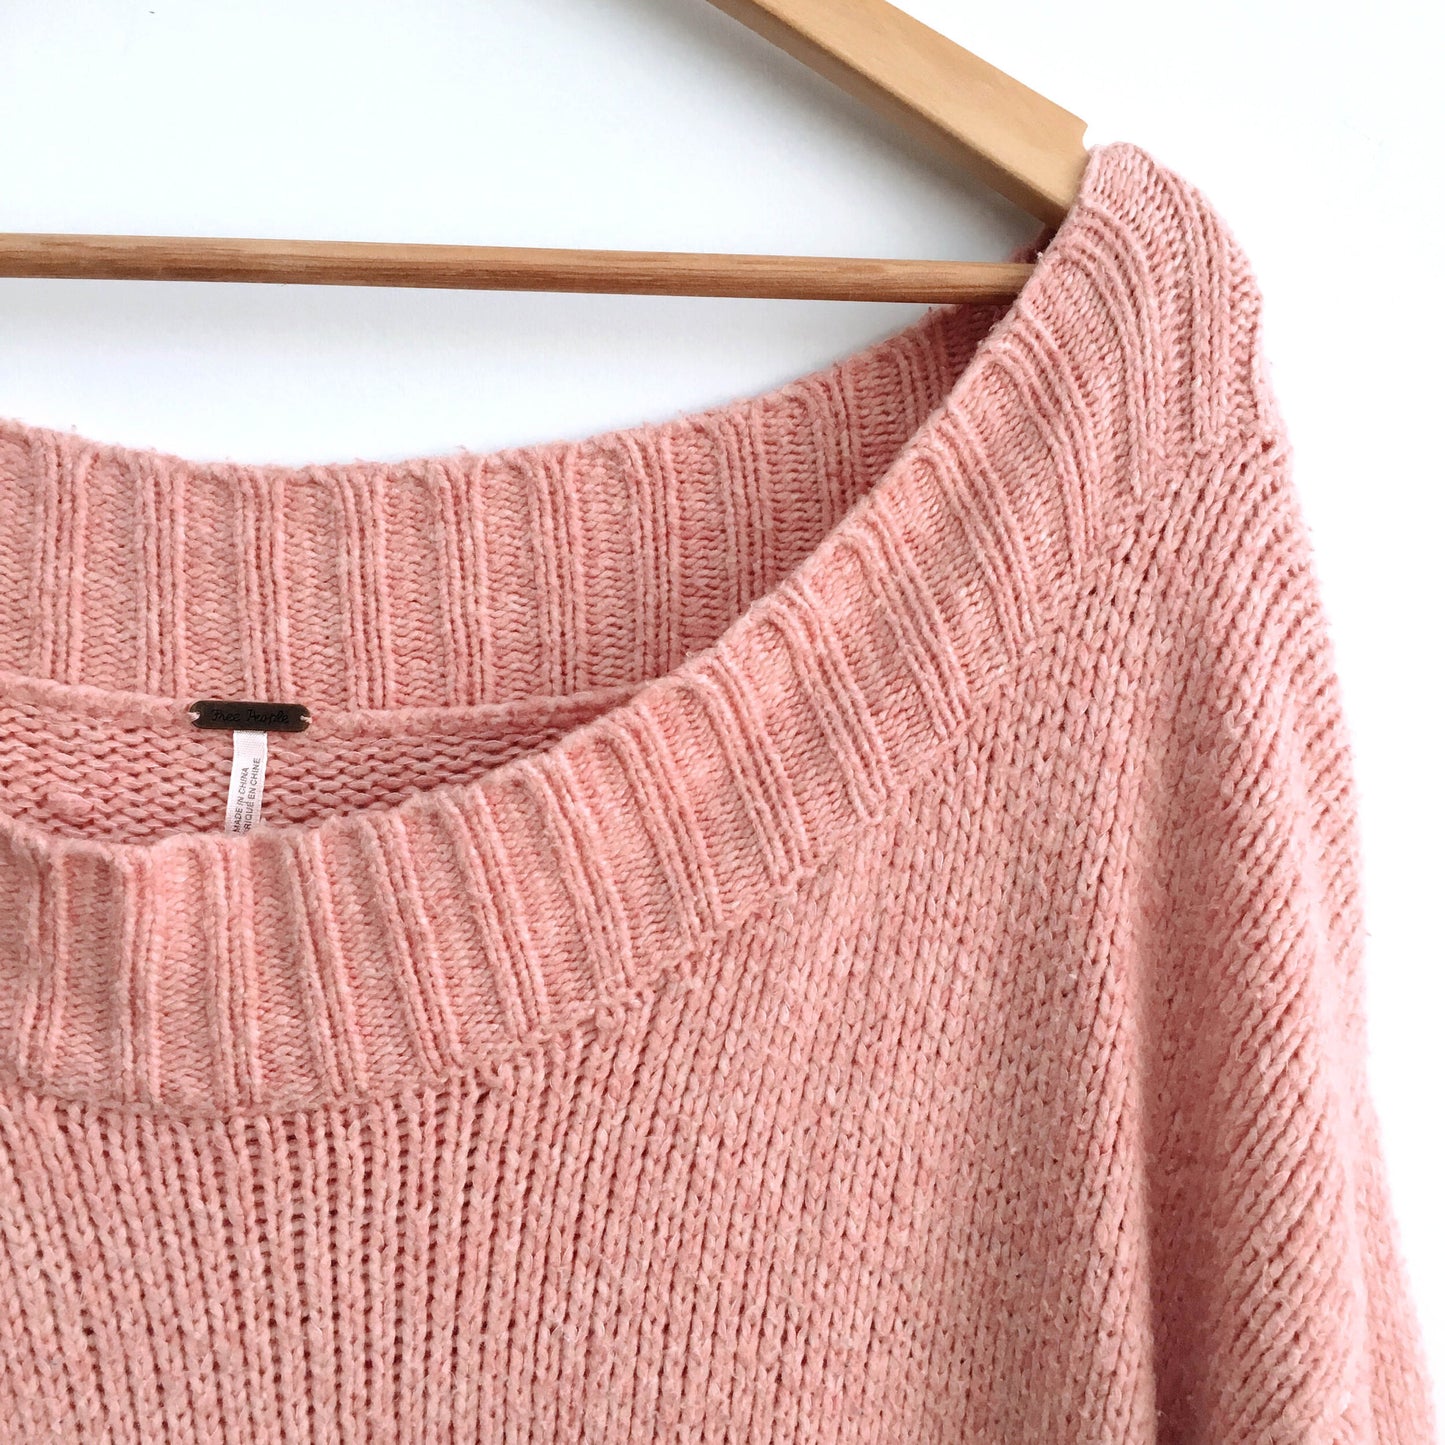 Free People cashmere blend sweater - size Medium